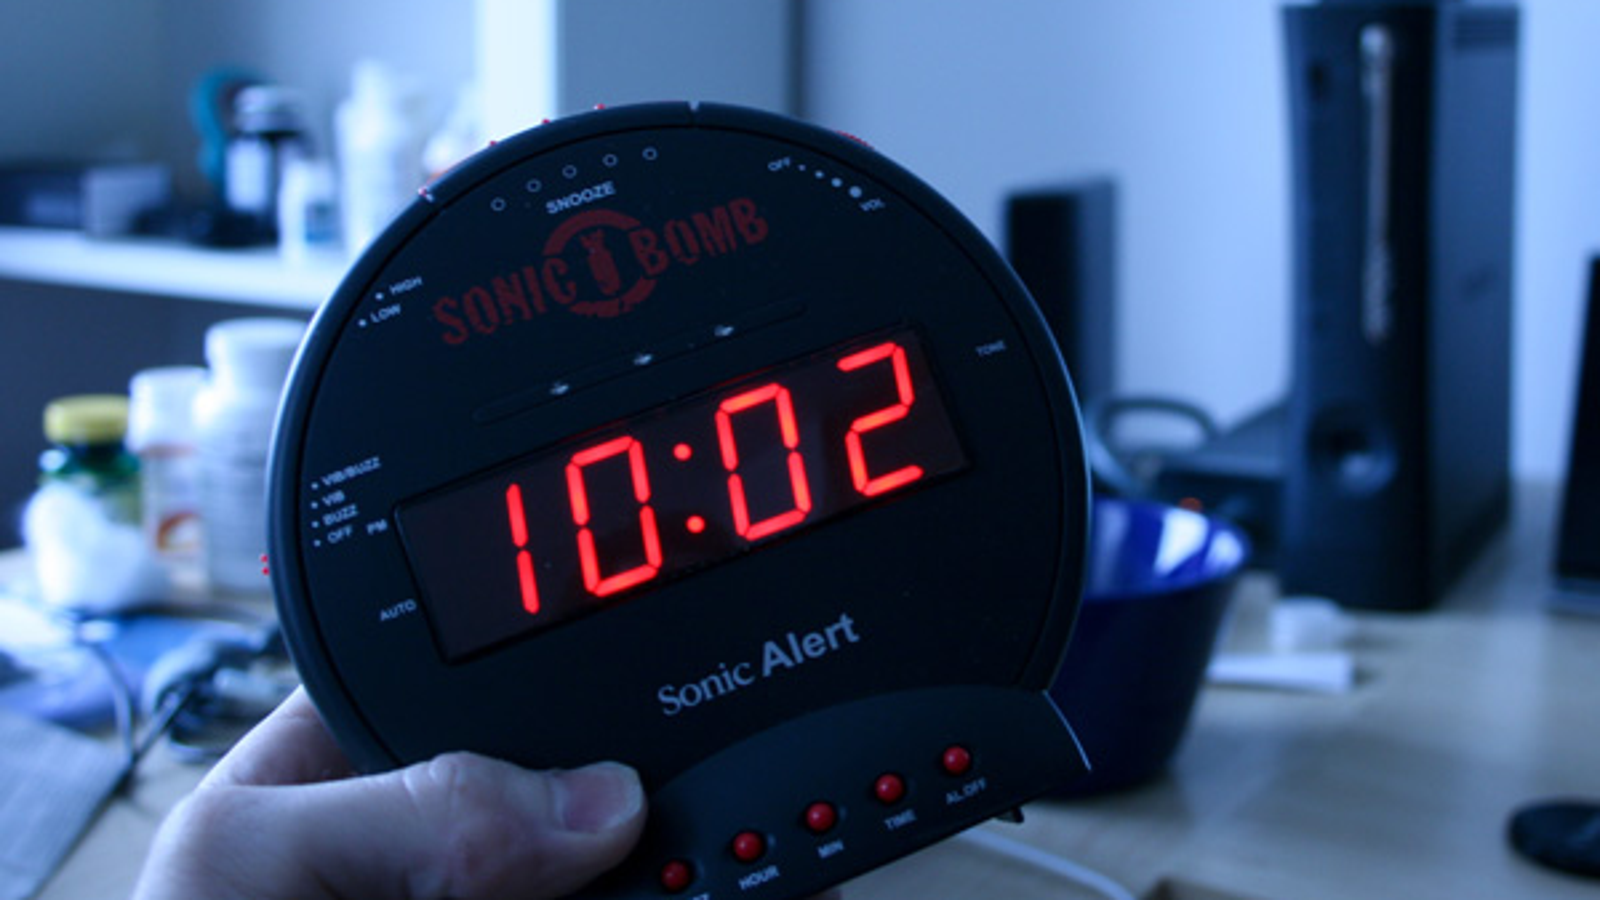 sonic bomb alarm clock